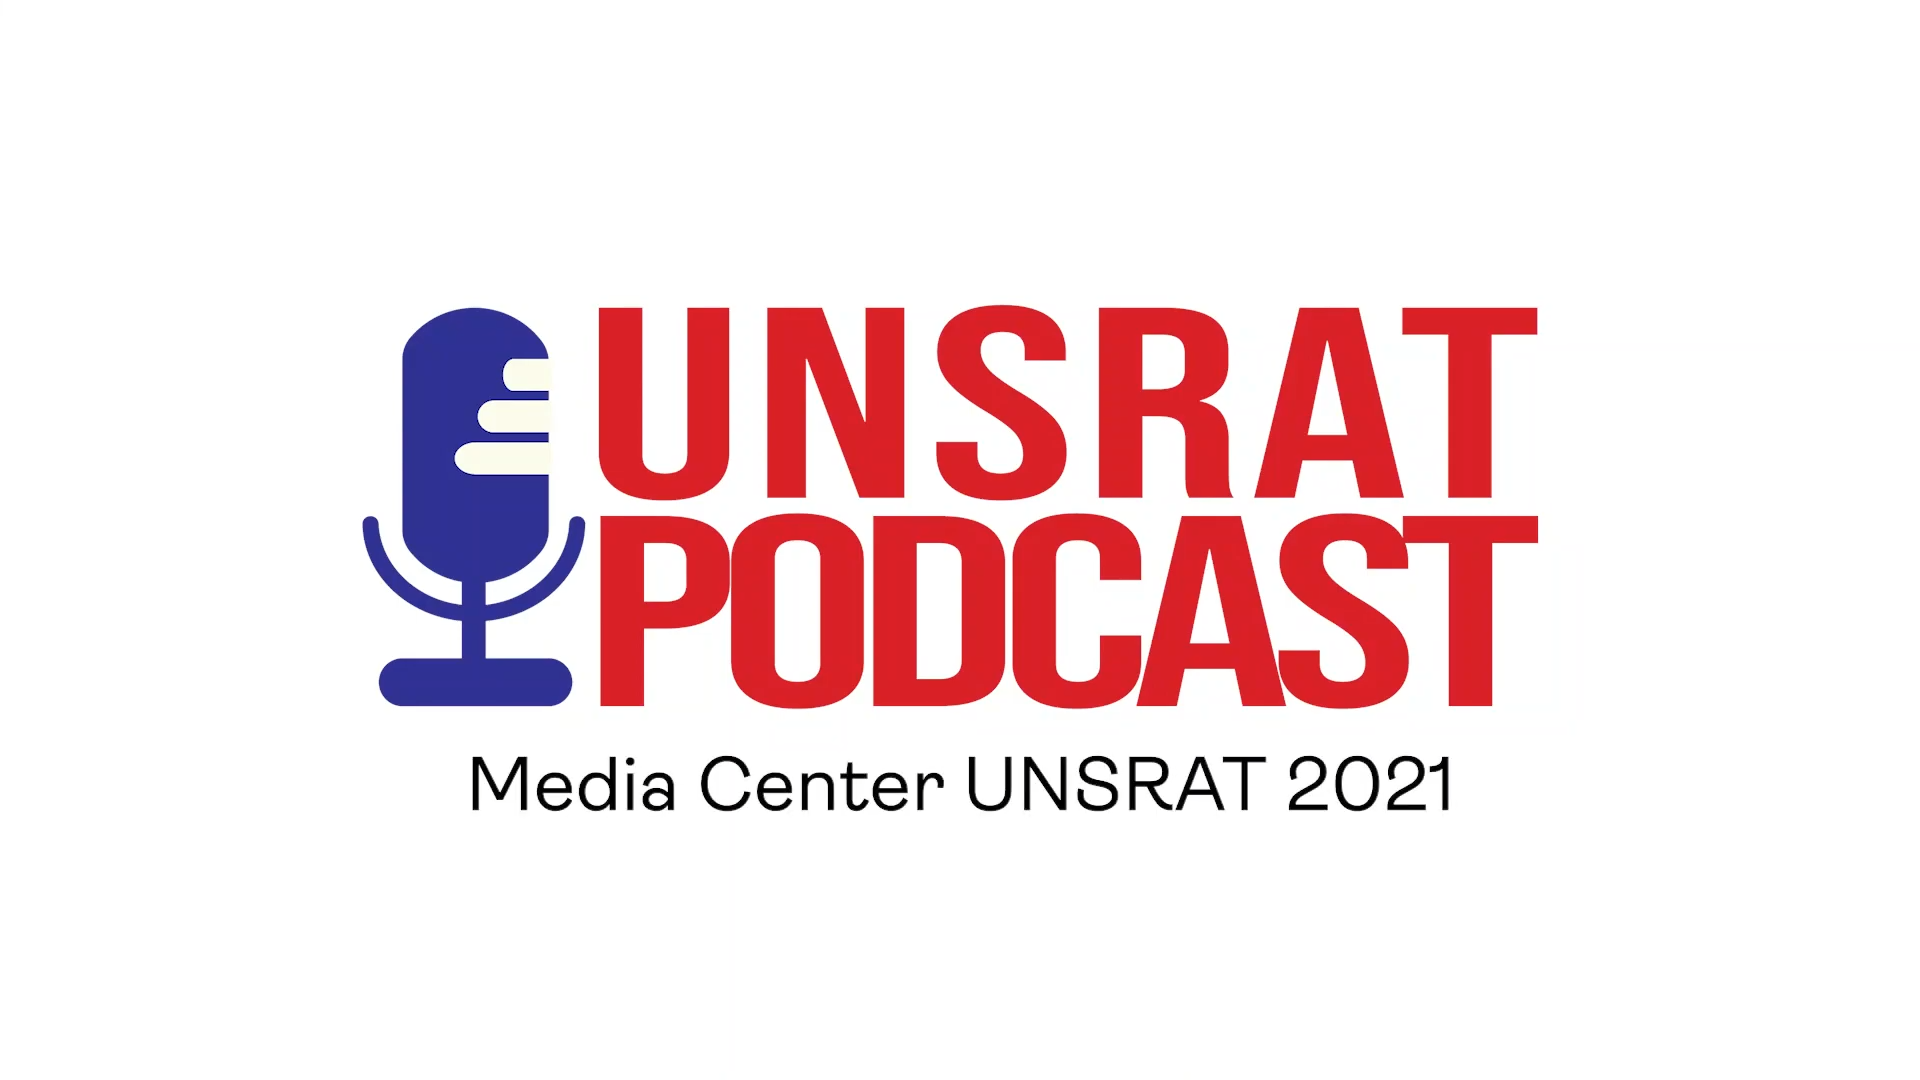 UNSRAT Podcast #3 – Kuliah Zaman Now! UNSRAT Elearning solusi pembelajaran di tengah pandemi